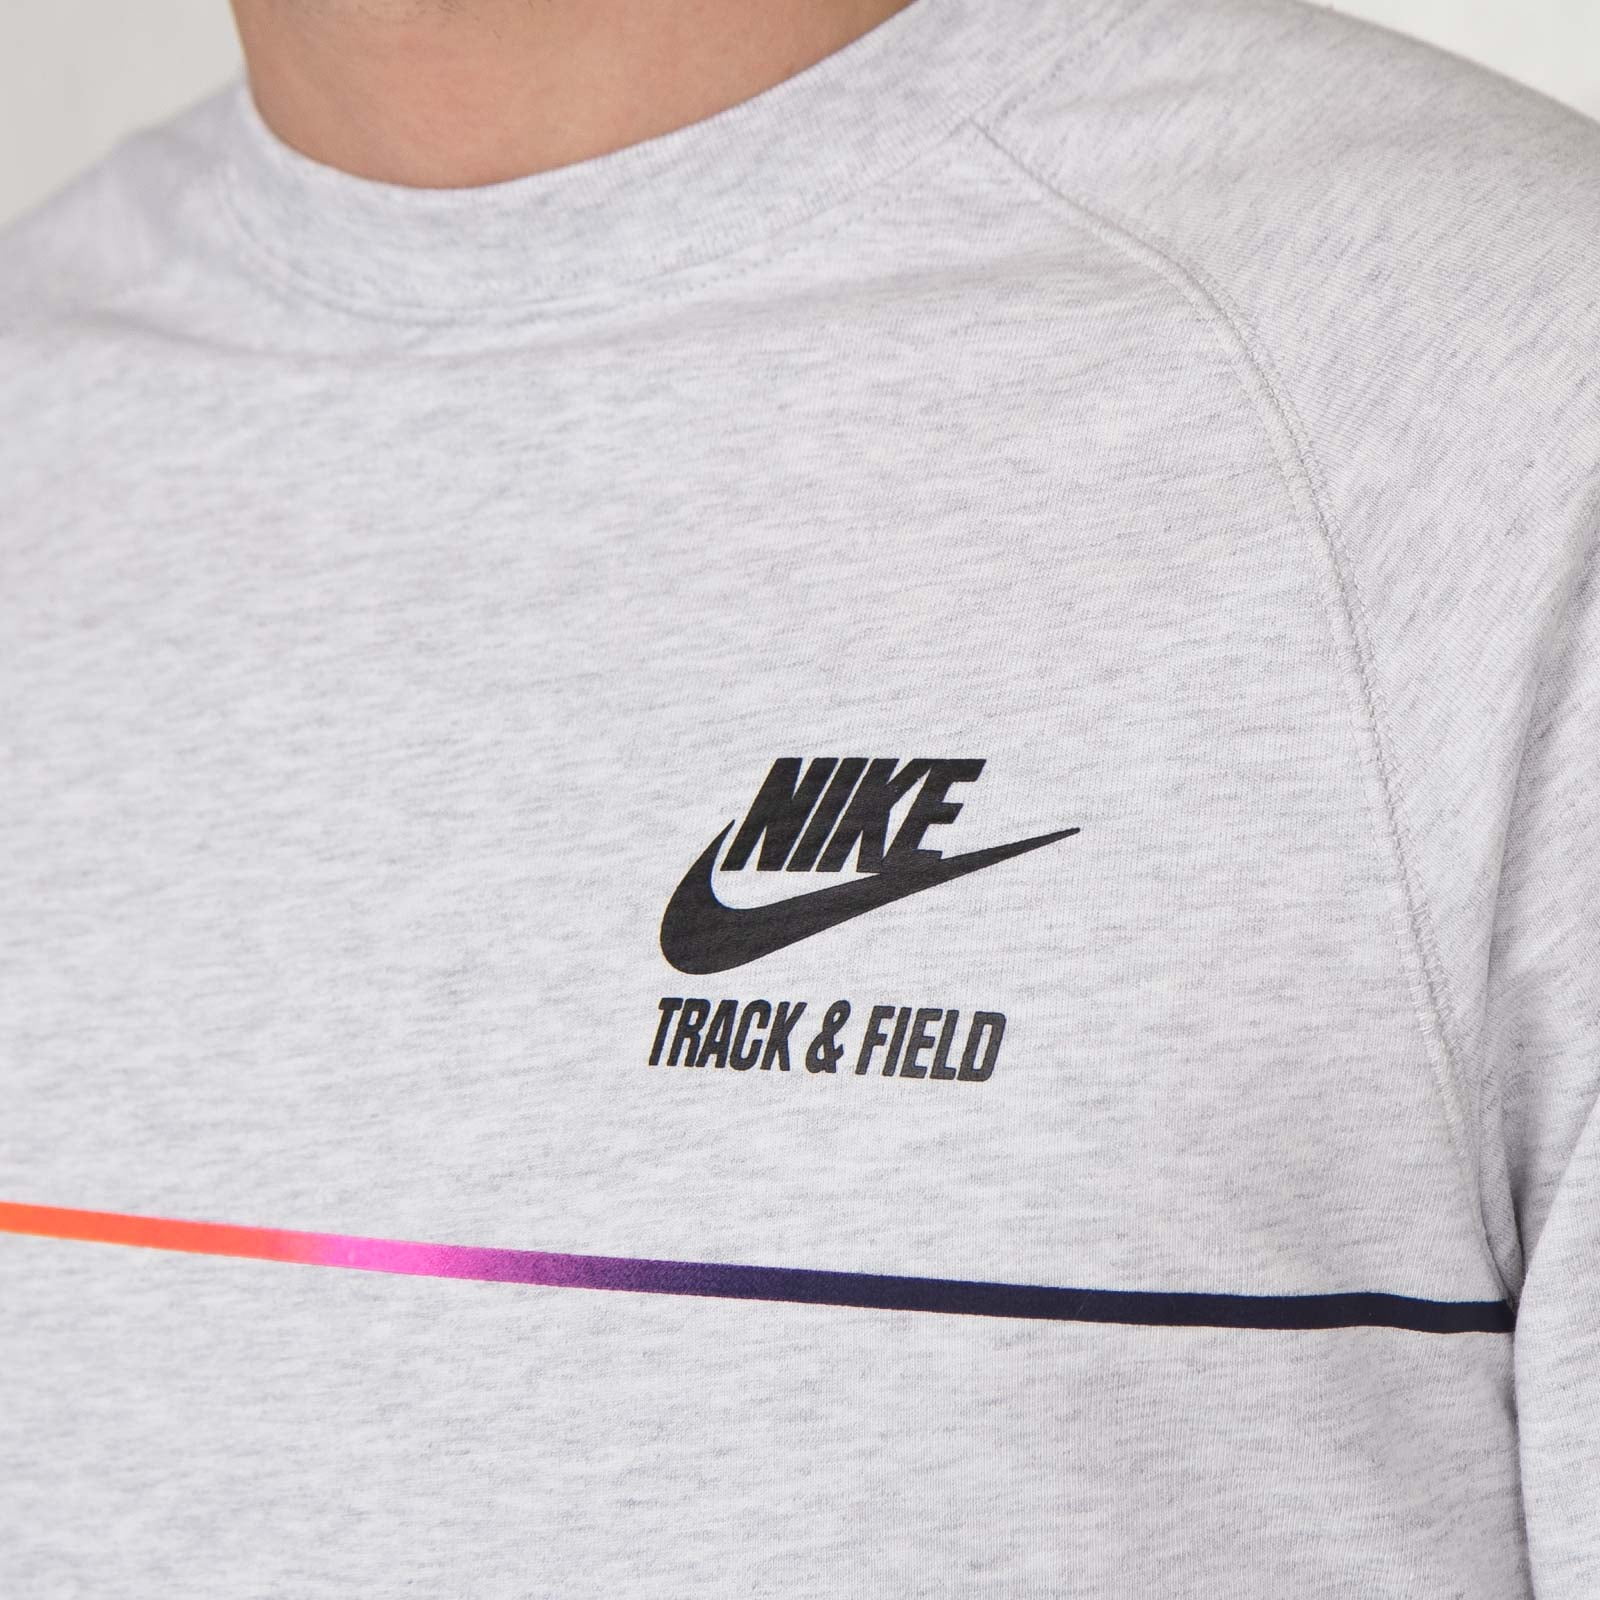 Nike track. Nike track and field. Мешок track and field Nike. NT найк.